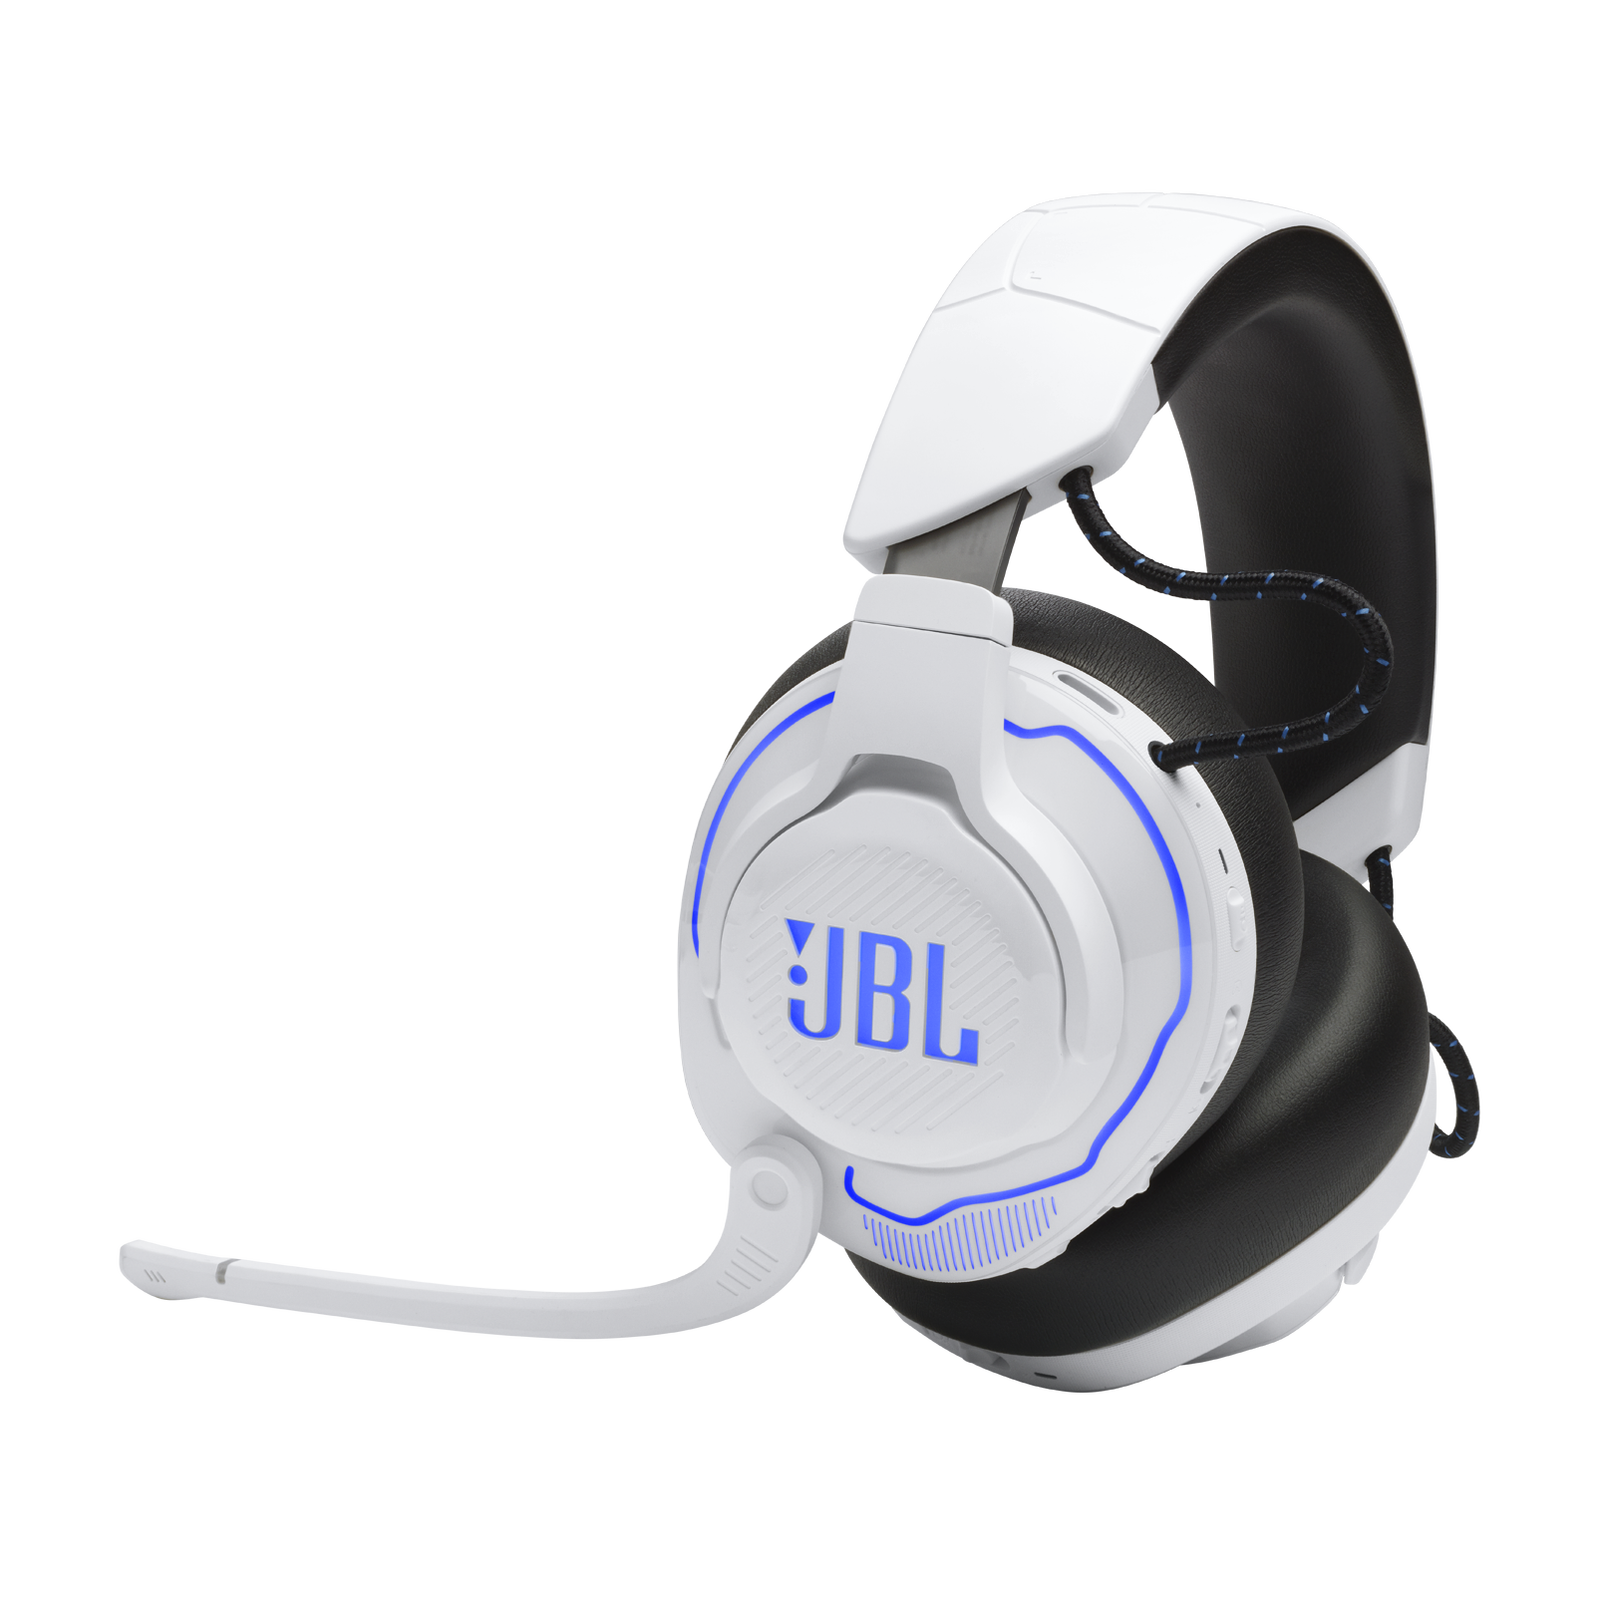 JBL Quantum 910P Console Wireless White Gaming Headset REFURBISHED